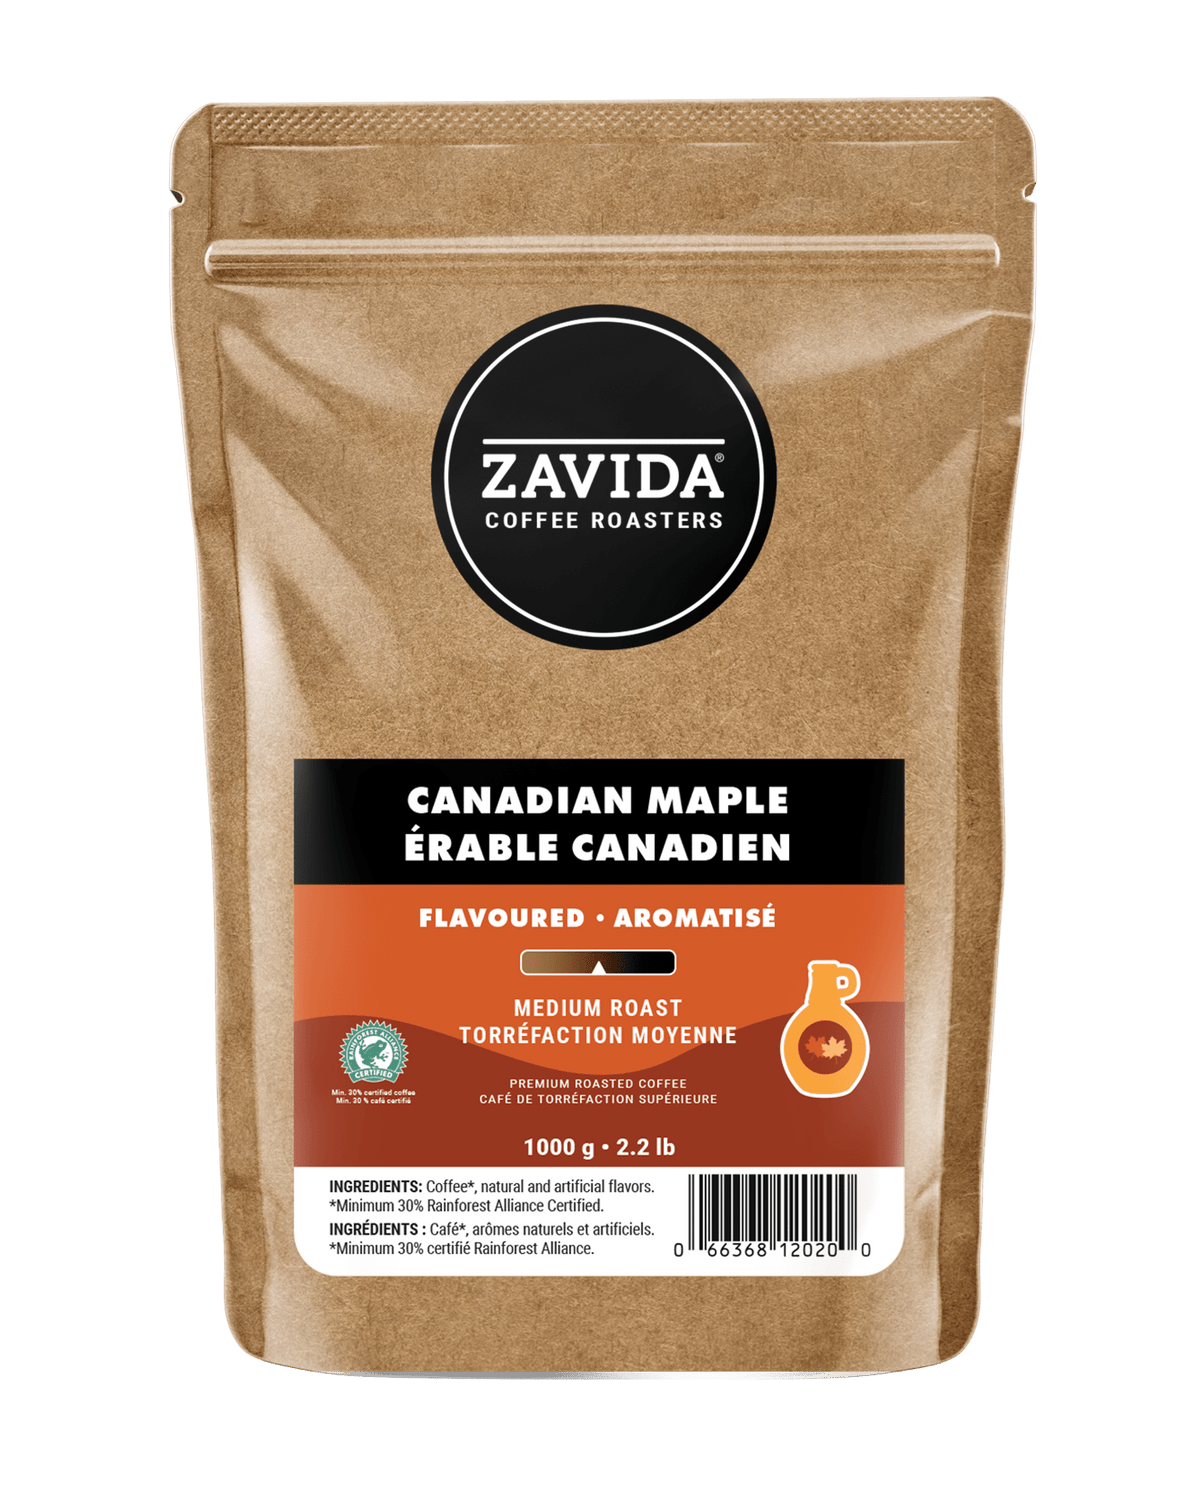 LIMITED EDITION Canadian Maple Coffee - 1kg - Zavida Coffee